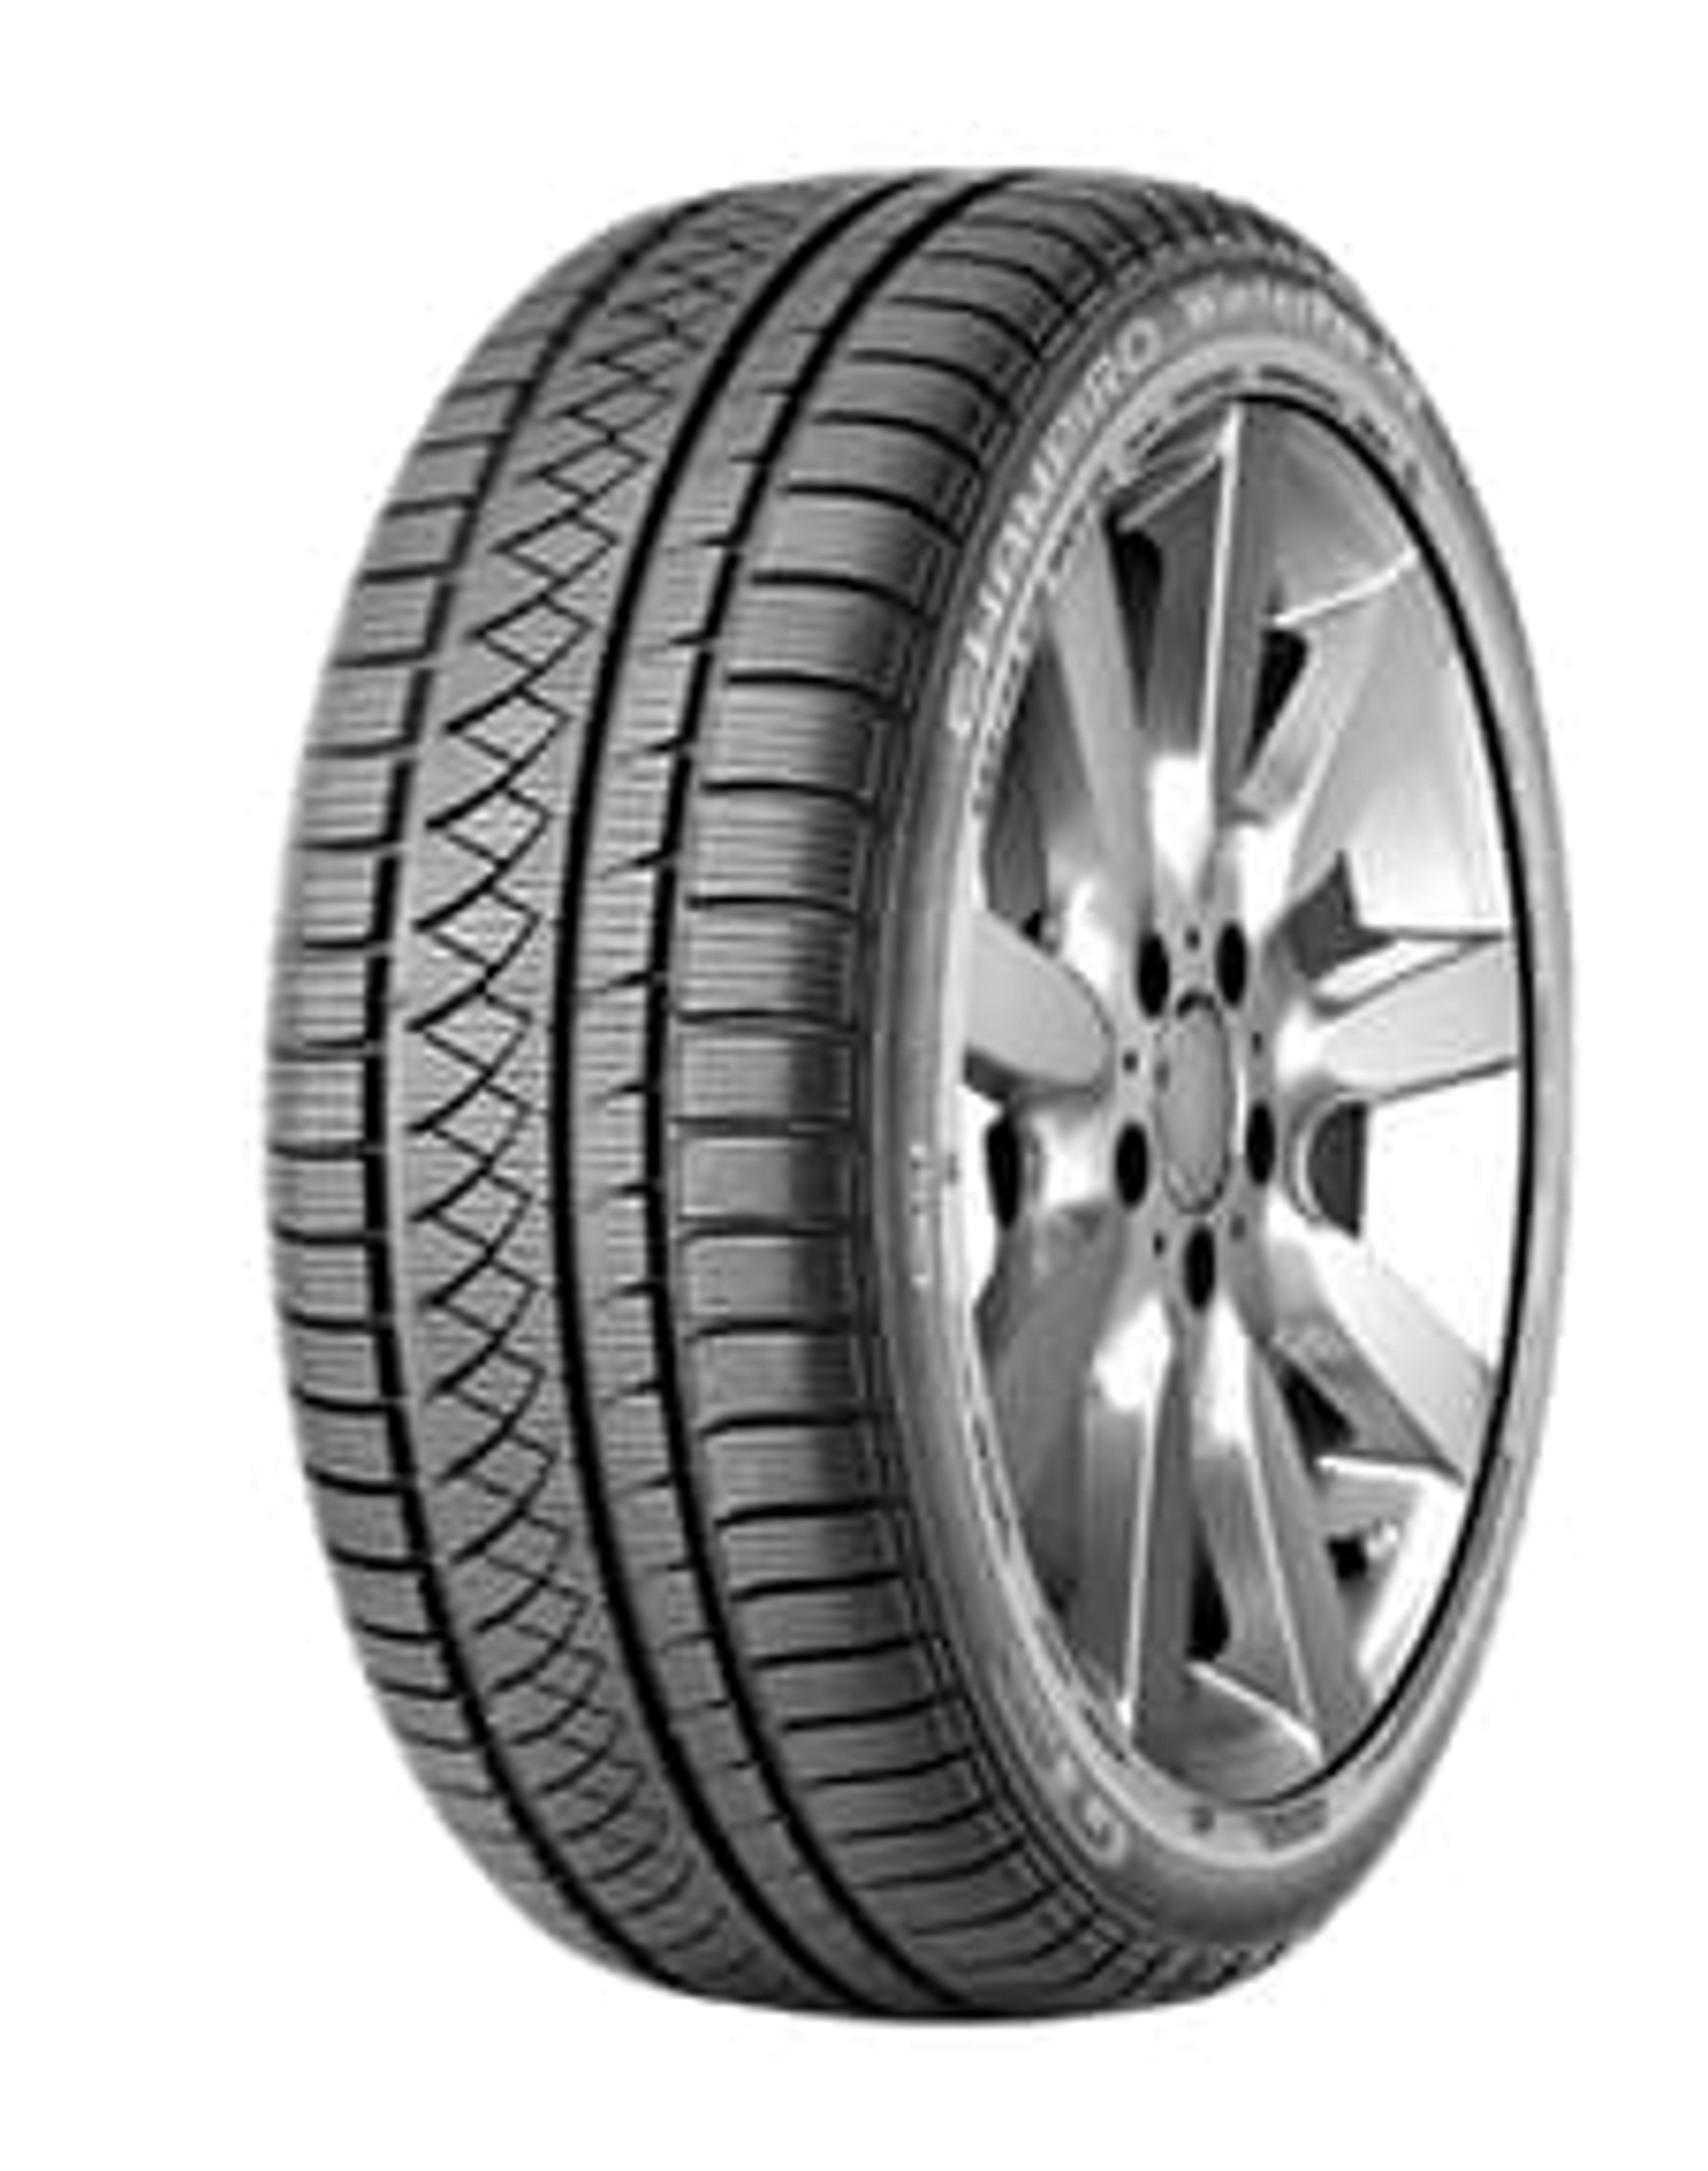 Online Buy HP Tires Radial Champiro Winterpro | GT SimpleTire